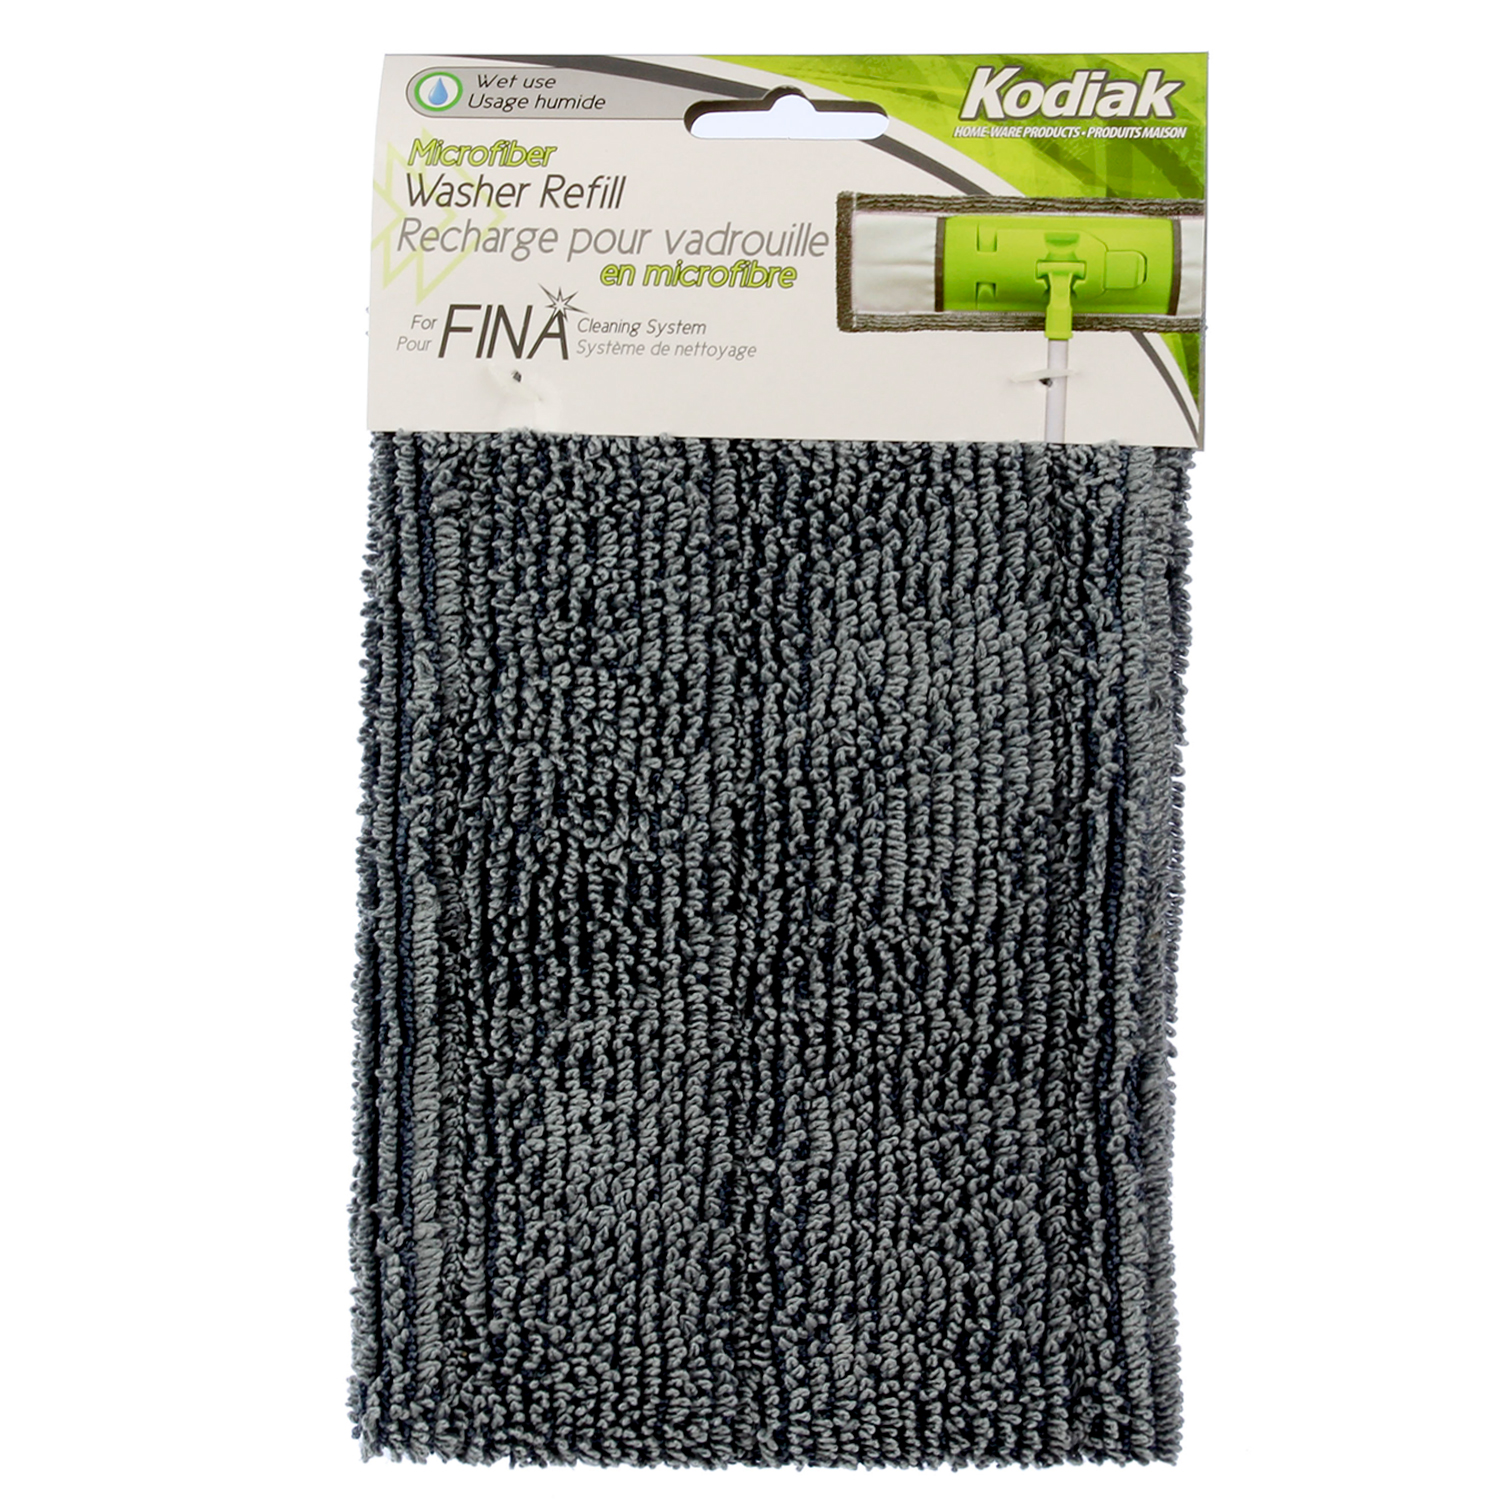 Kodiak - Fina microfiber washer refill